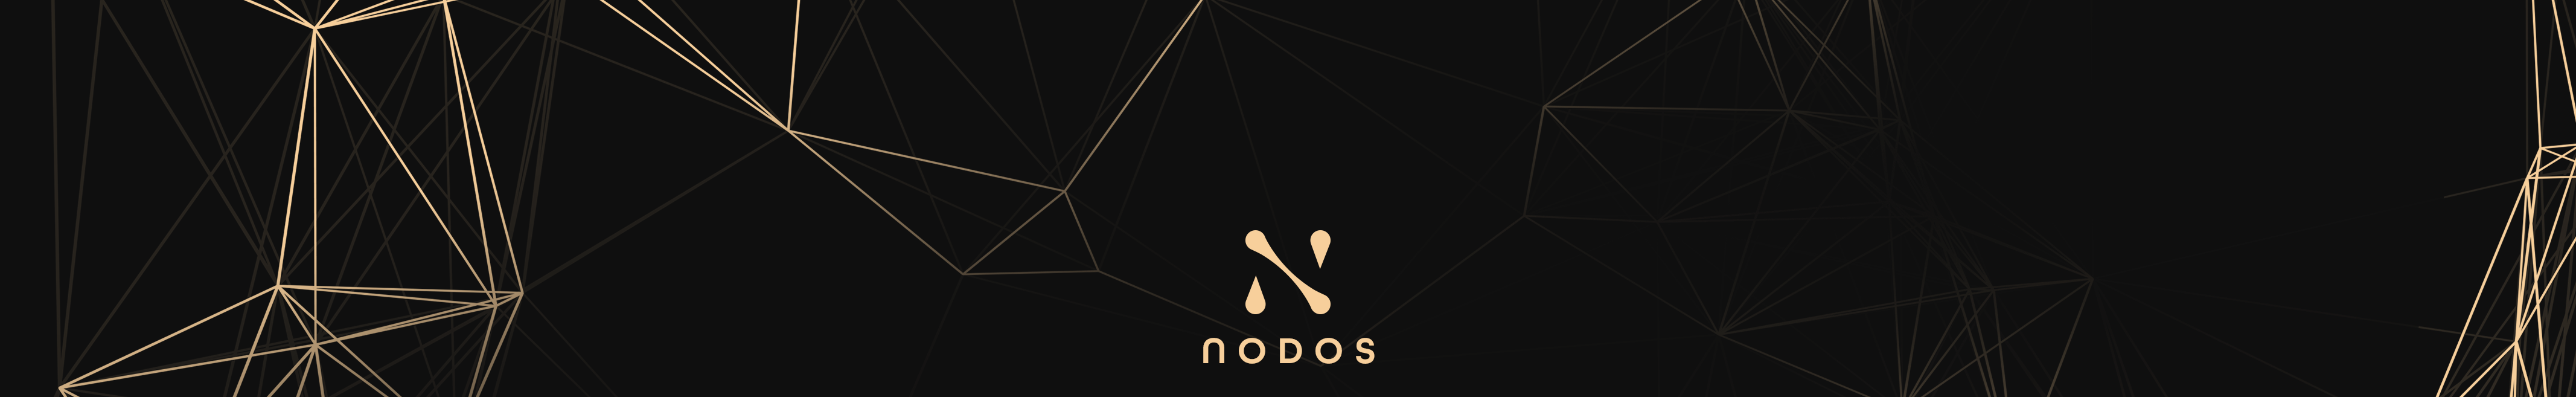 Nodos Creative's profile banner